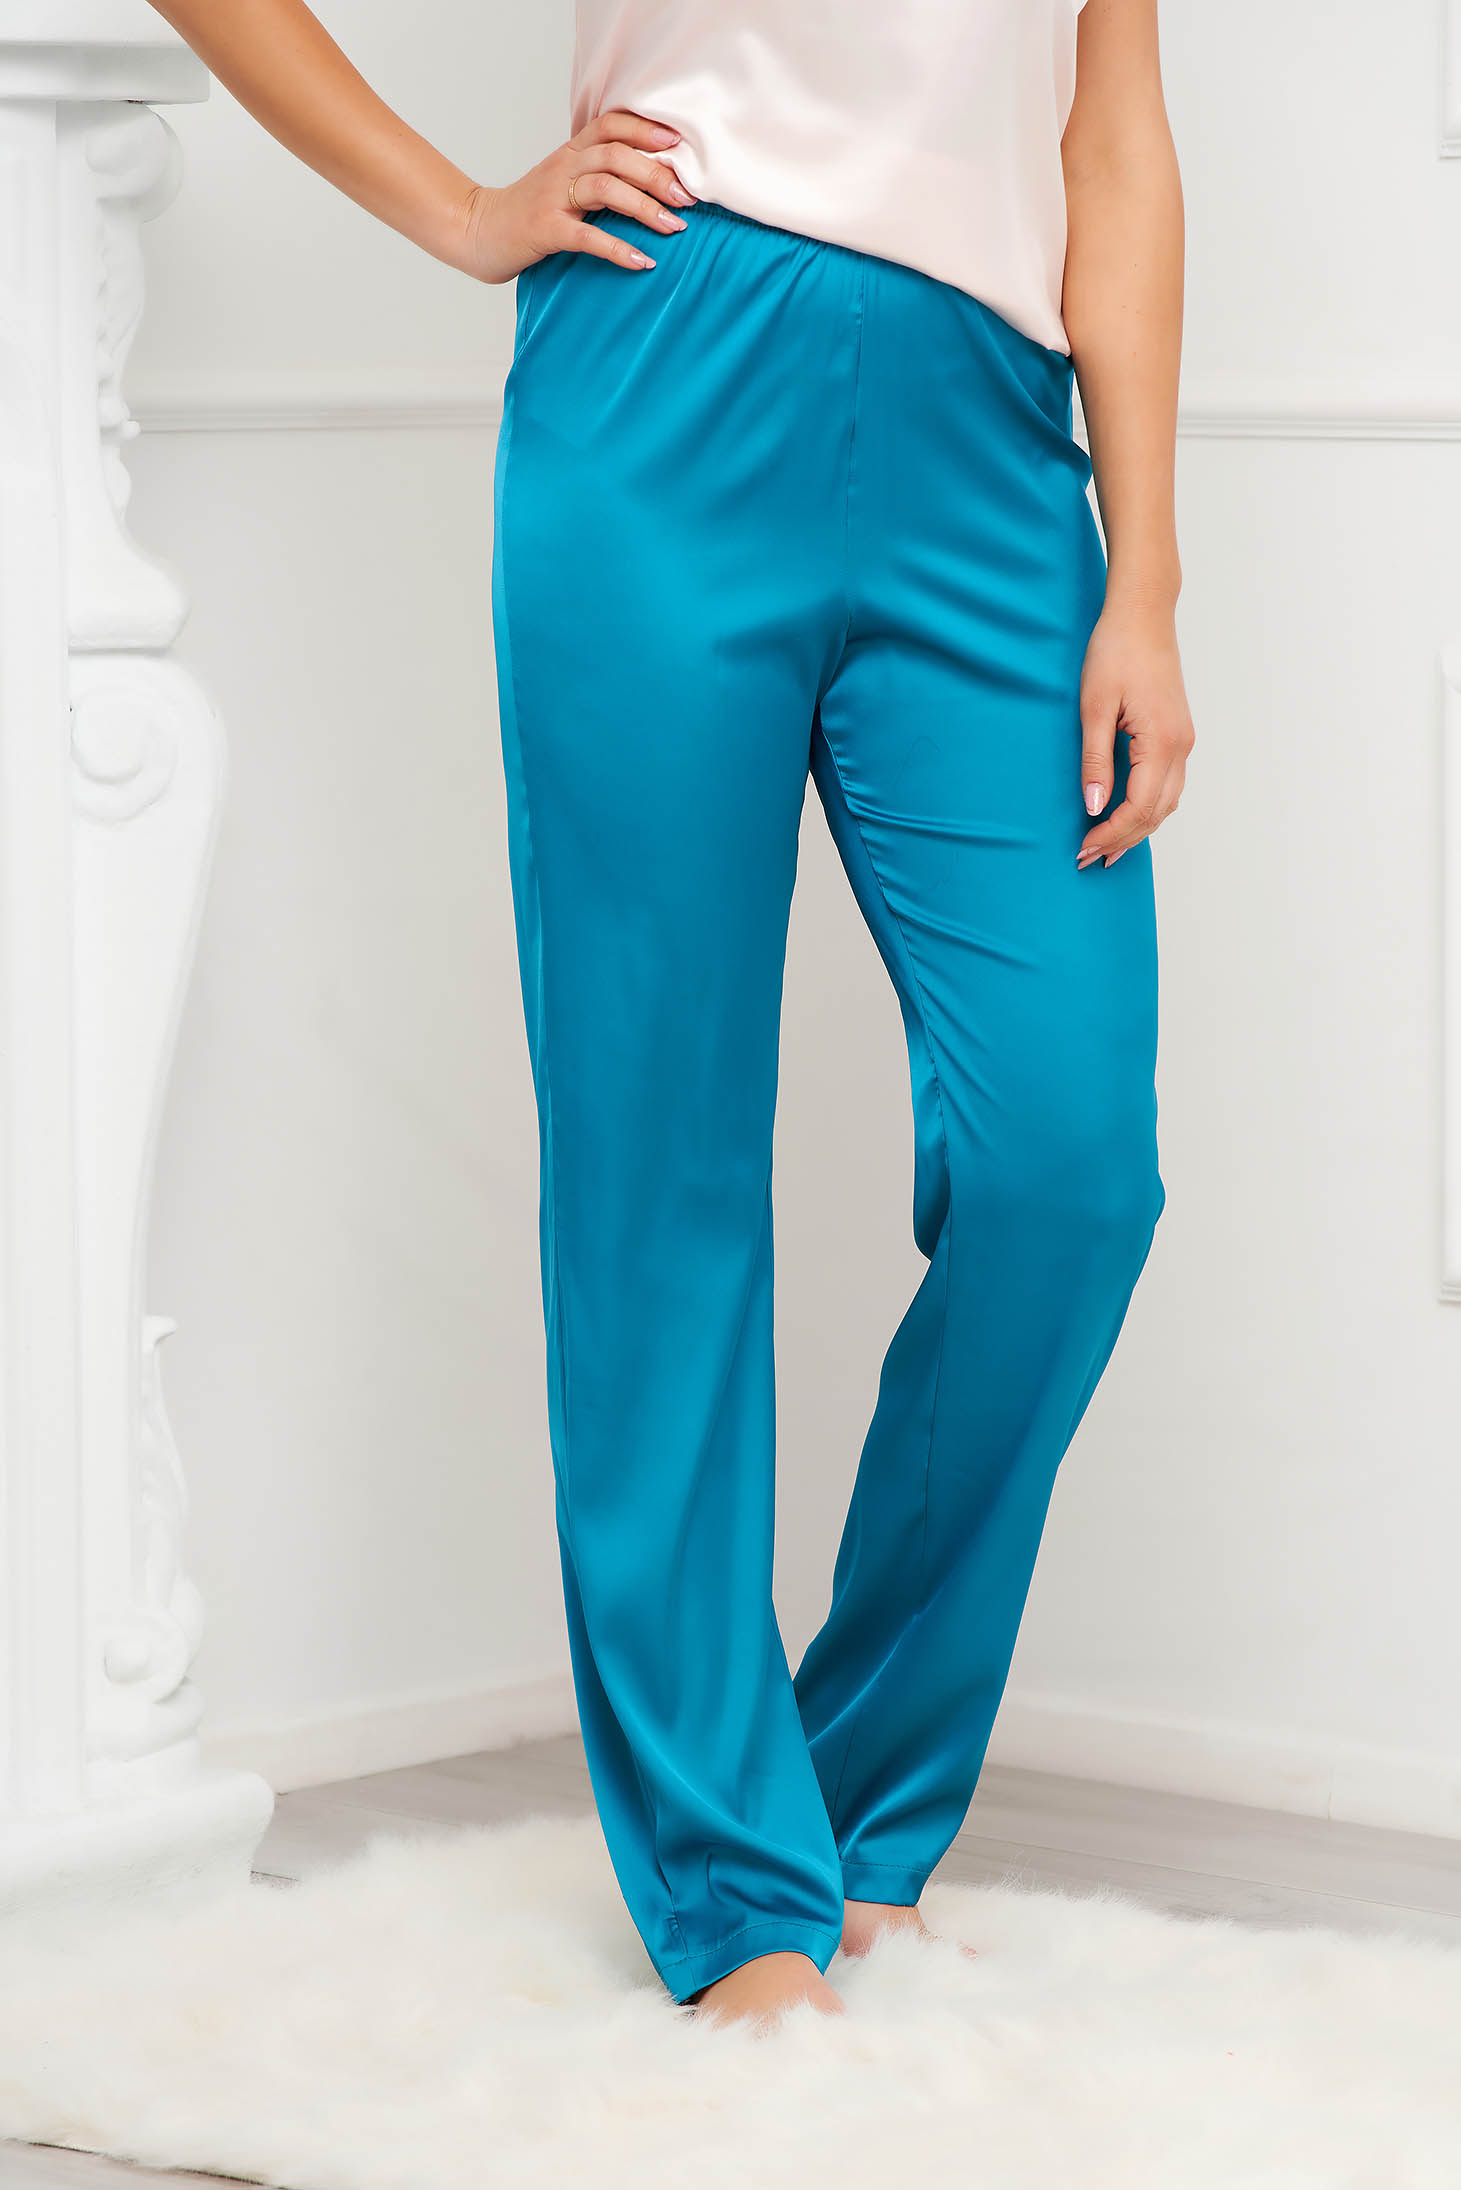 Pantaloni de pijama din satin turquoise cu un croi drept si talie normala - StarShinerS 1 - StarShinerS.ro